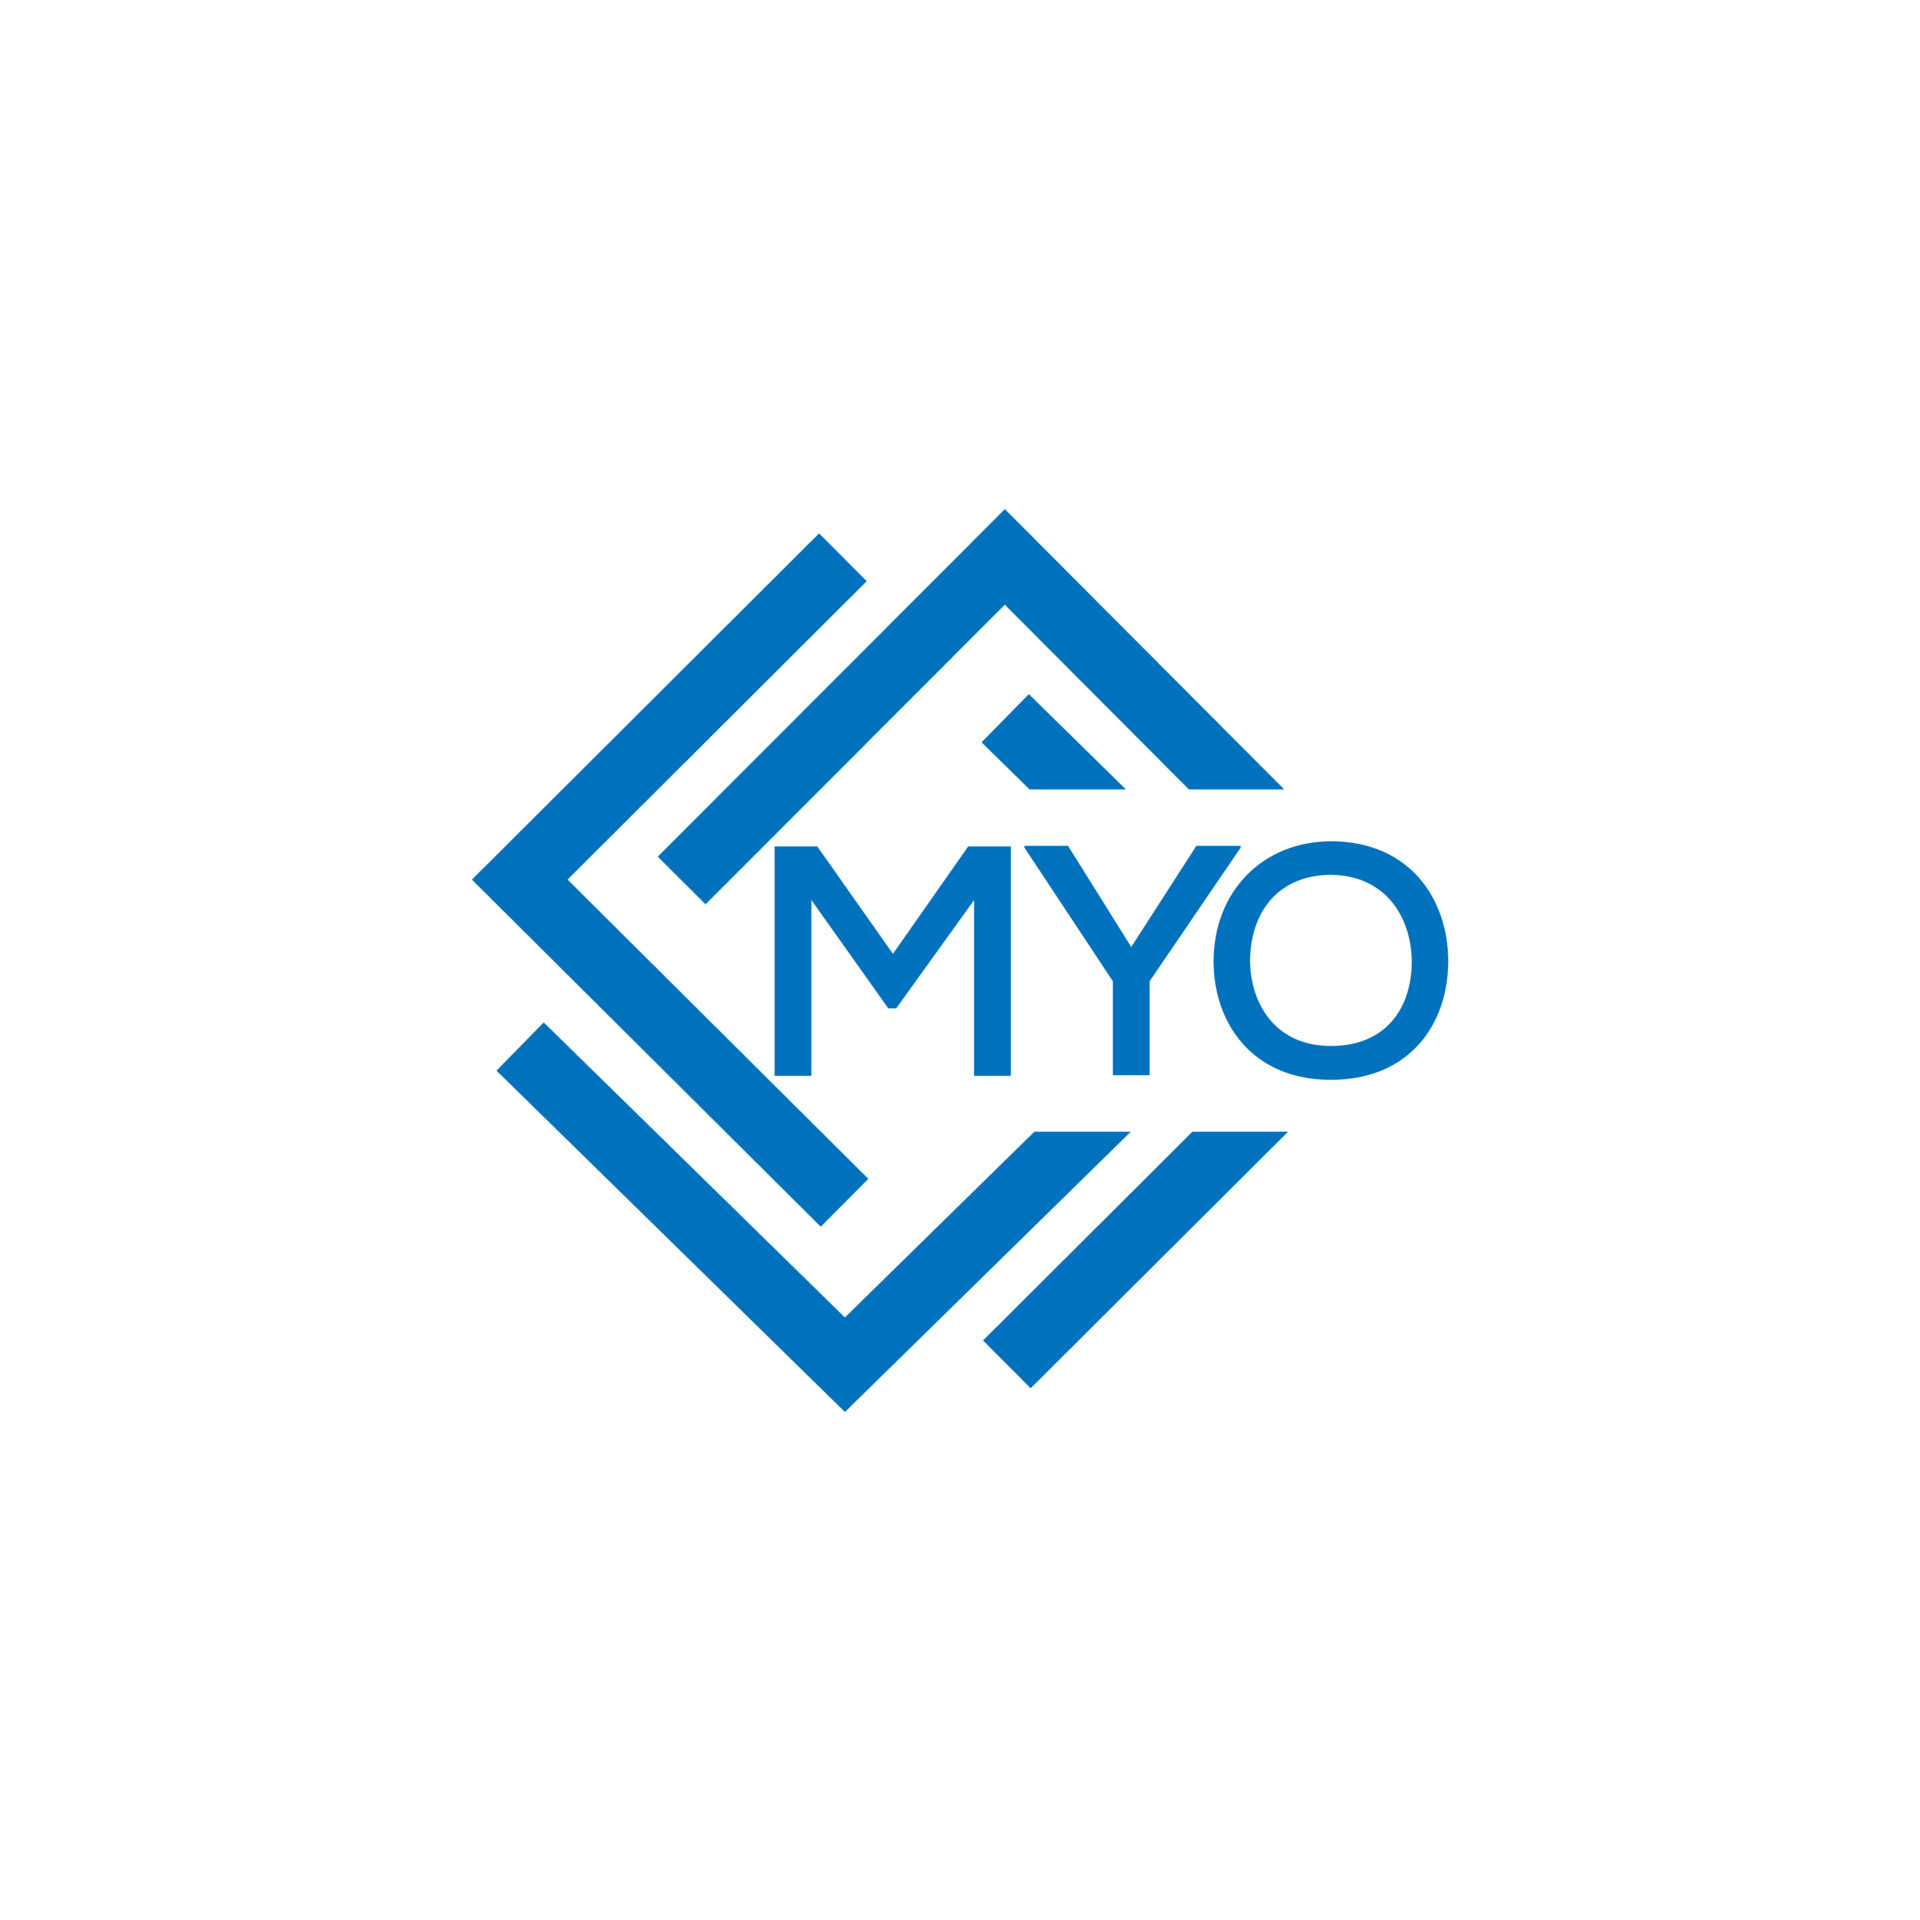 https://static.vecteezy.com/system/resources/previews/020/324/651/original/myo-letter-logo-design-on-white-background-myo-creative-circle-letter-logo-concept-myo-letter-design-vector.jpg